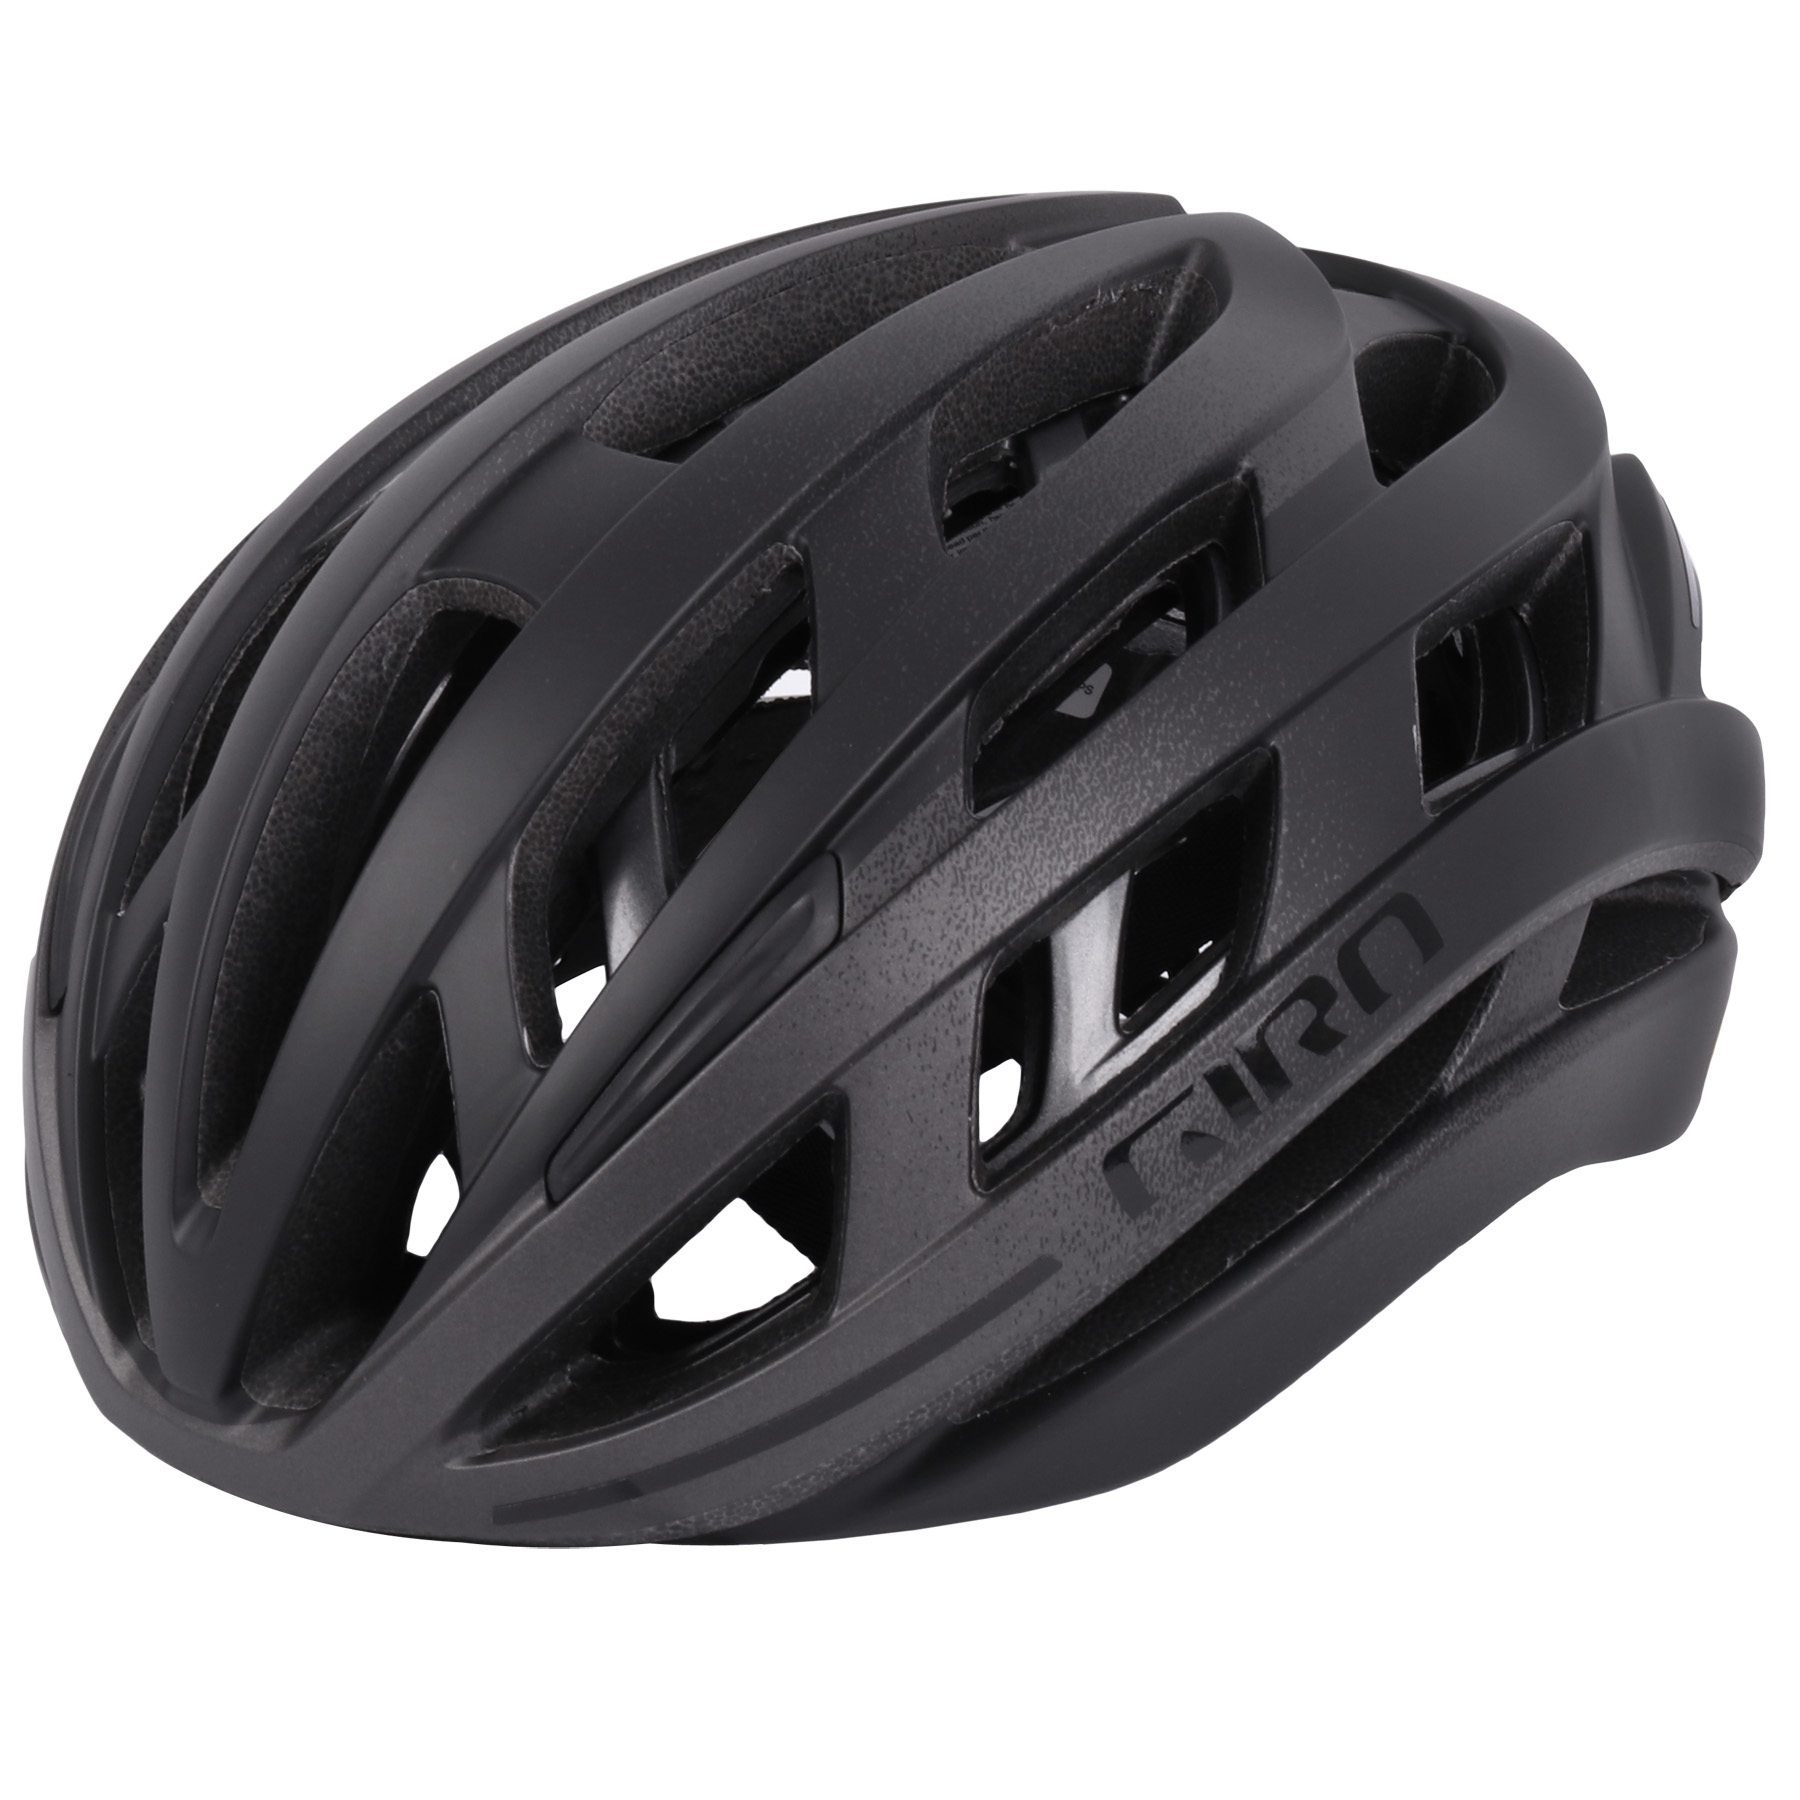 Picture of Giro Helios Spherical MIPS Helmet - matte black fade